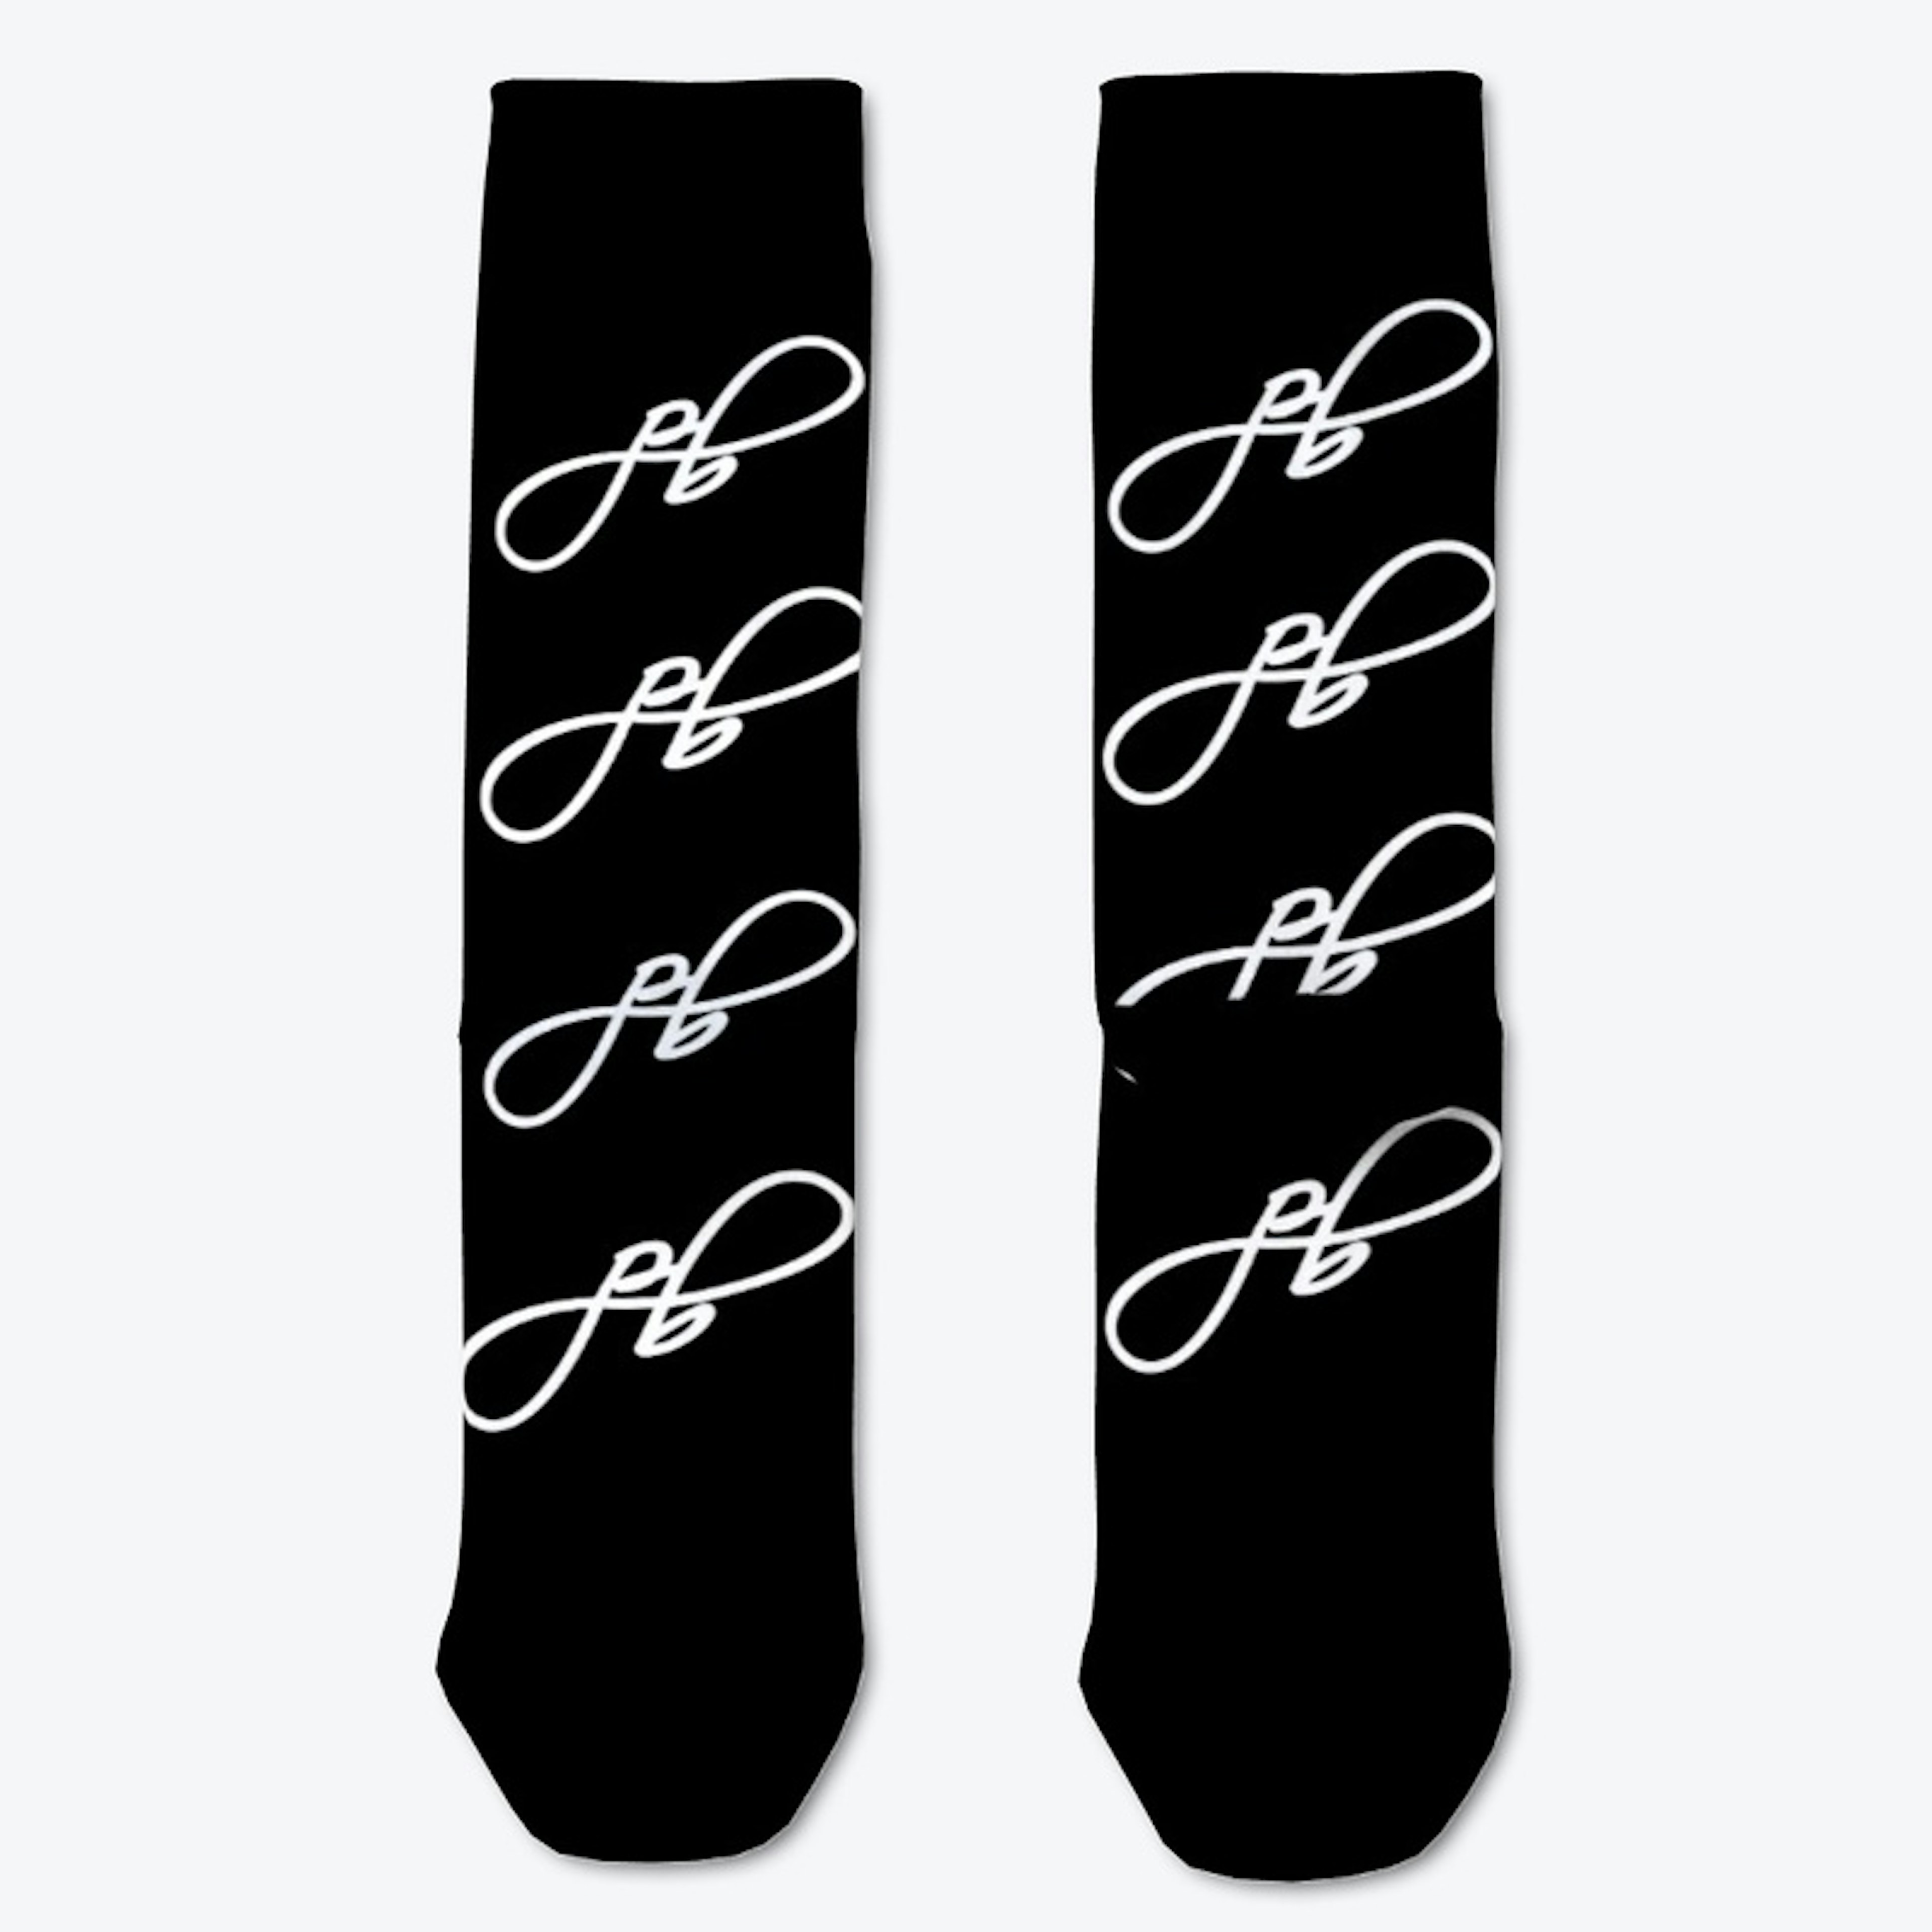 PB Infinity Socks Black